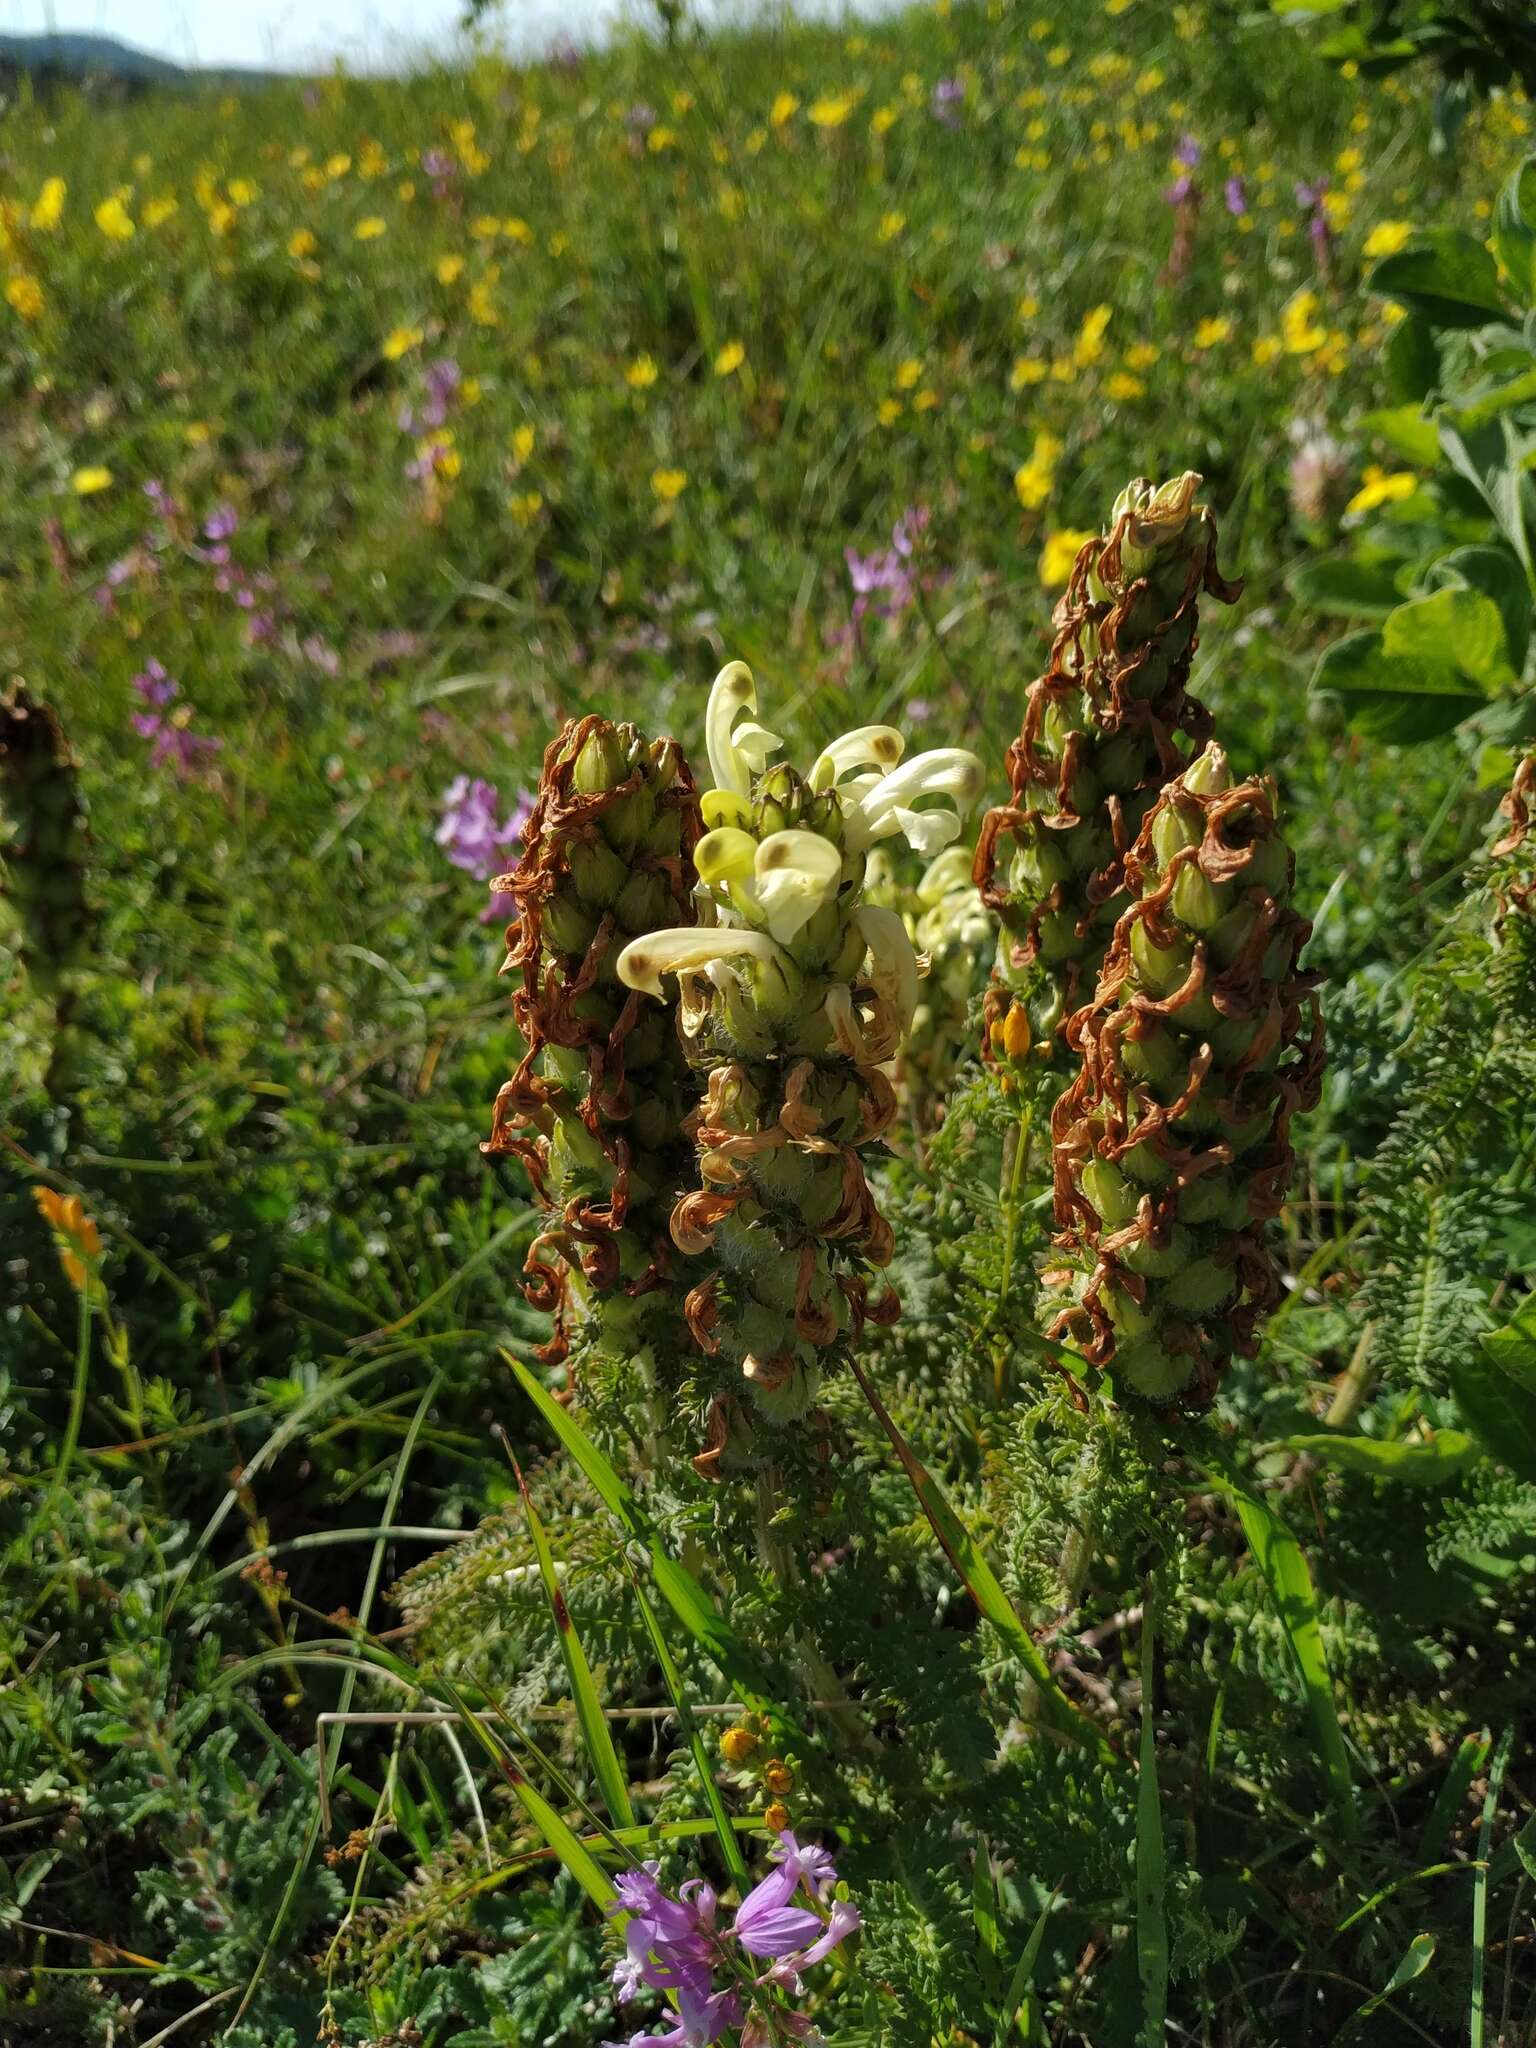 Image of Pedicularis sibthorpii Boiss.